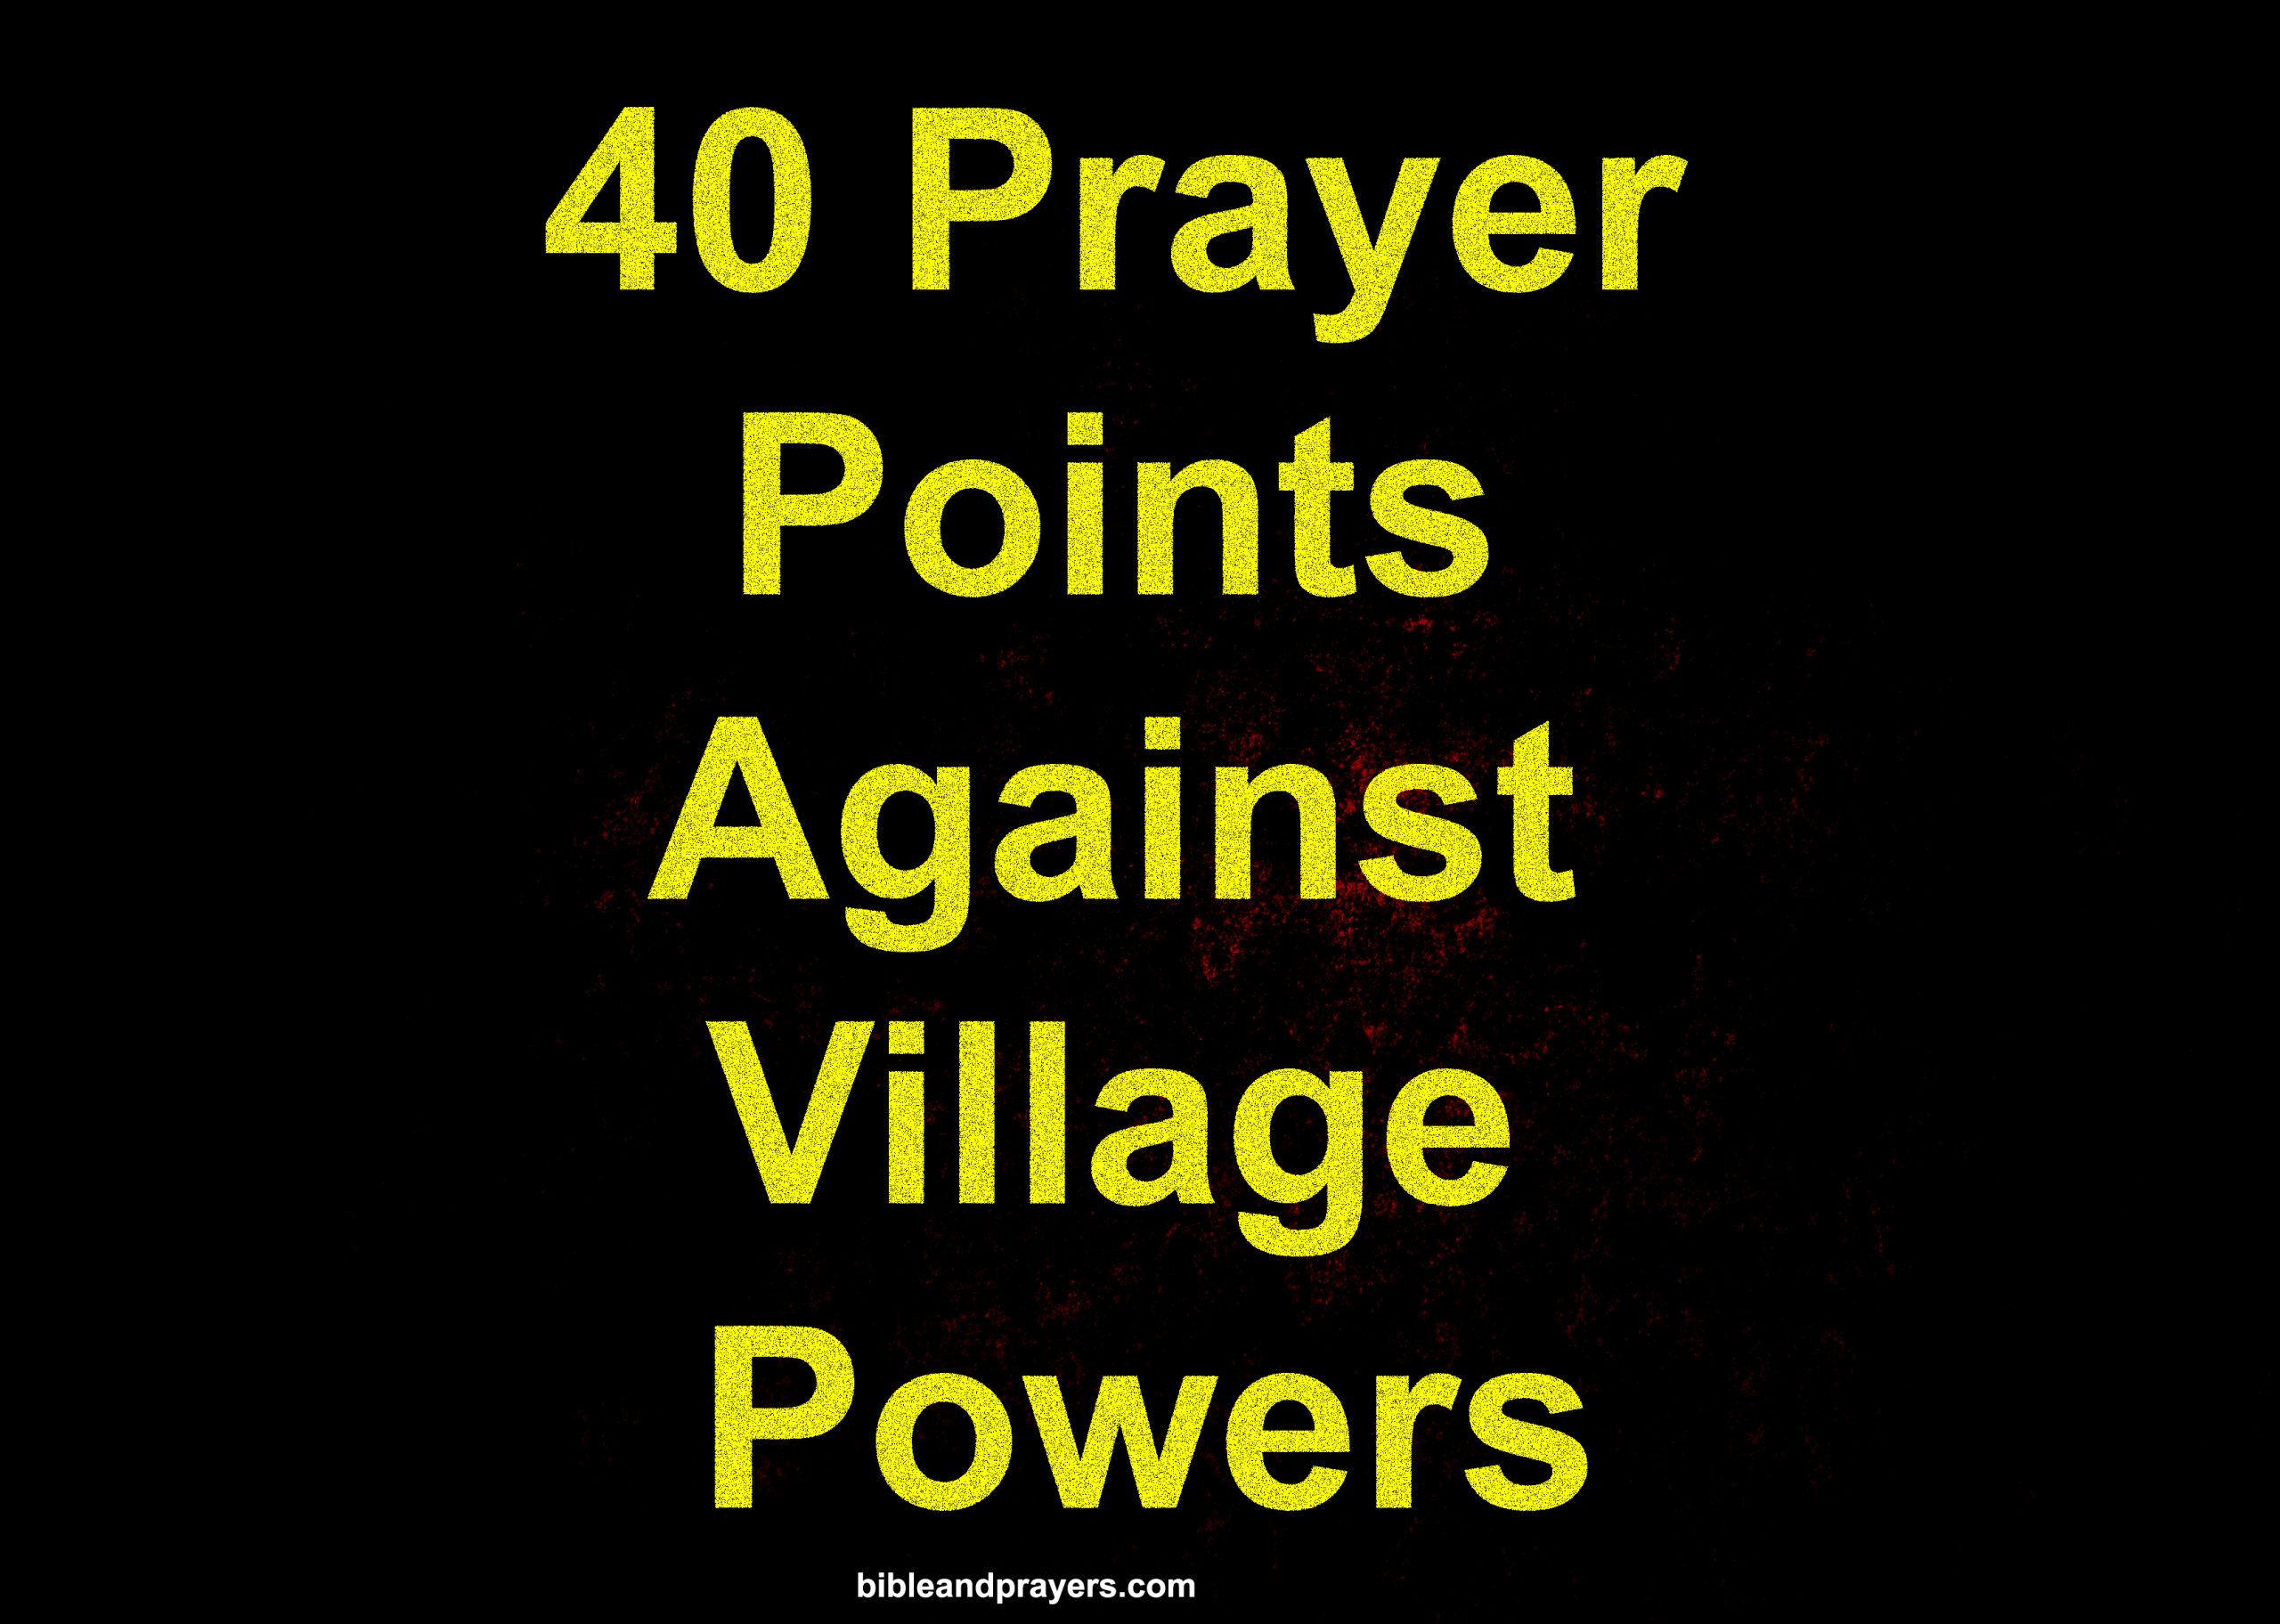 40 Prayer Points Against Village Powers